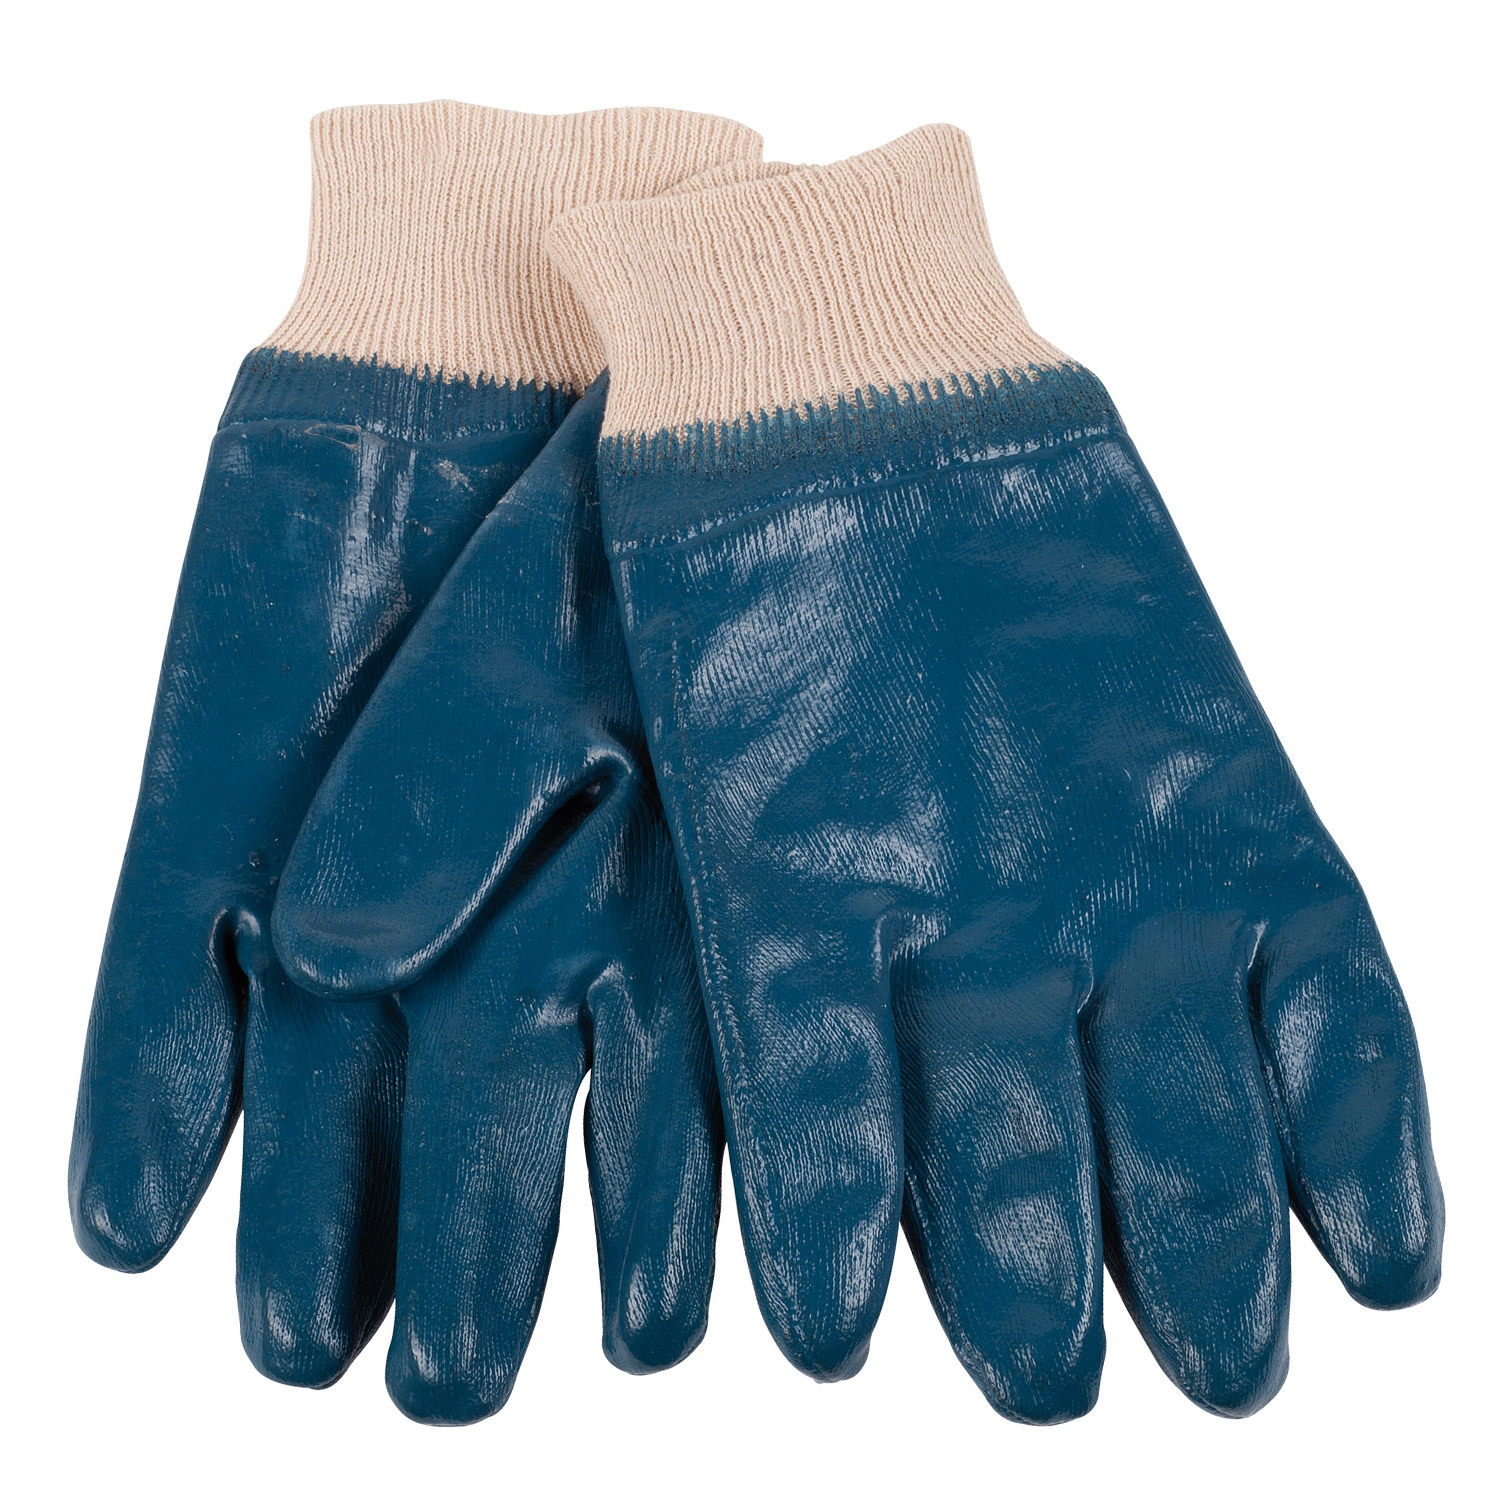 Kreator Arbeitshandschuhe Schutzhandschuhe Handschuhe waschbar Nitril Größe XL